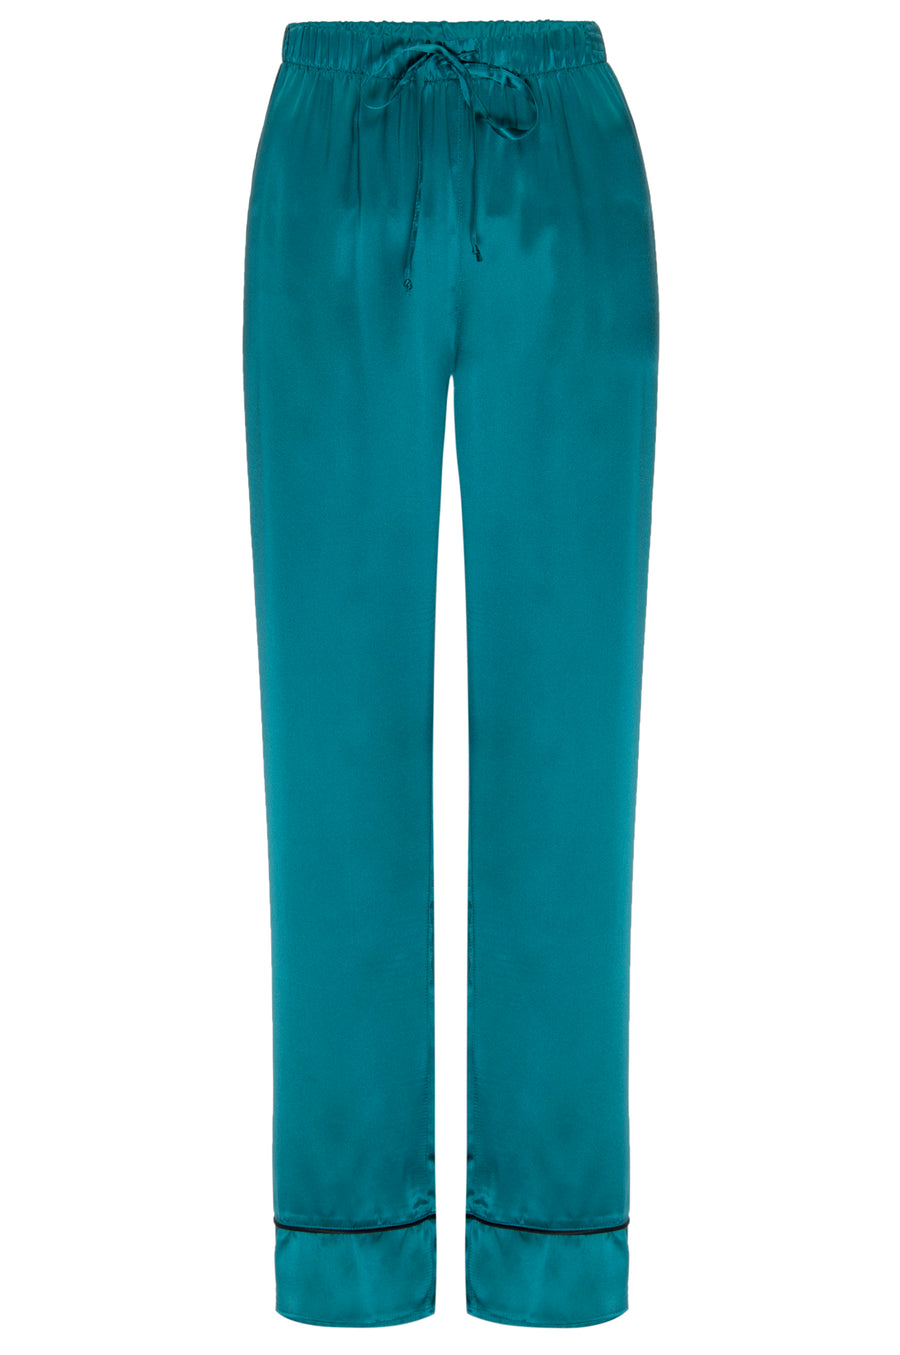 Silk Charmeuse Pants: Emerald